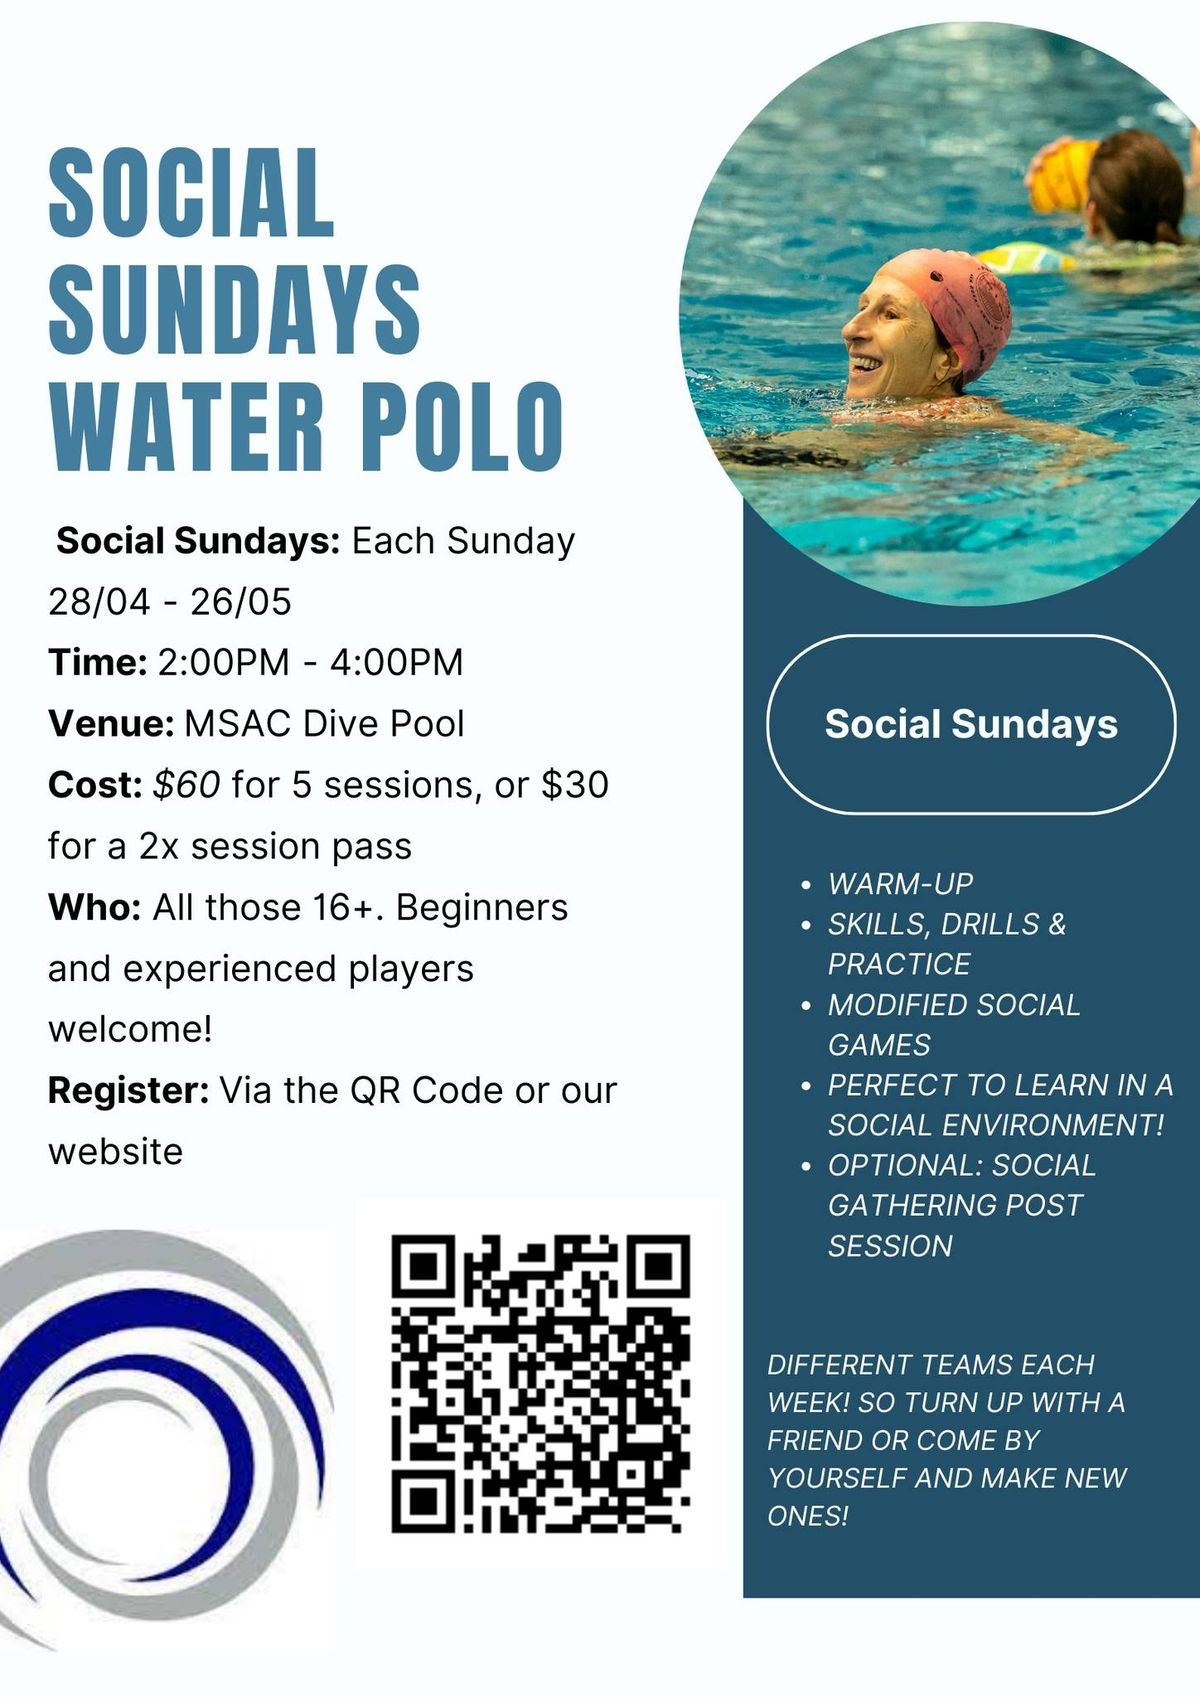 Social Sundays - Water Polo